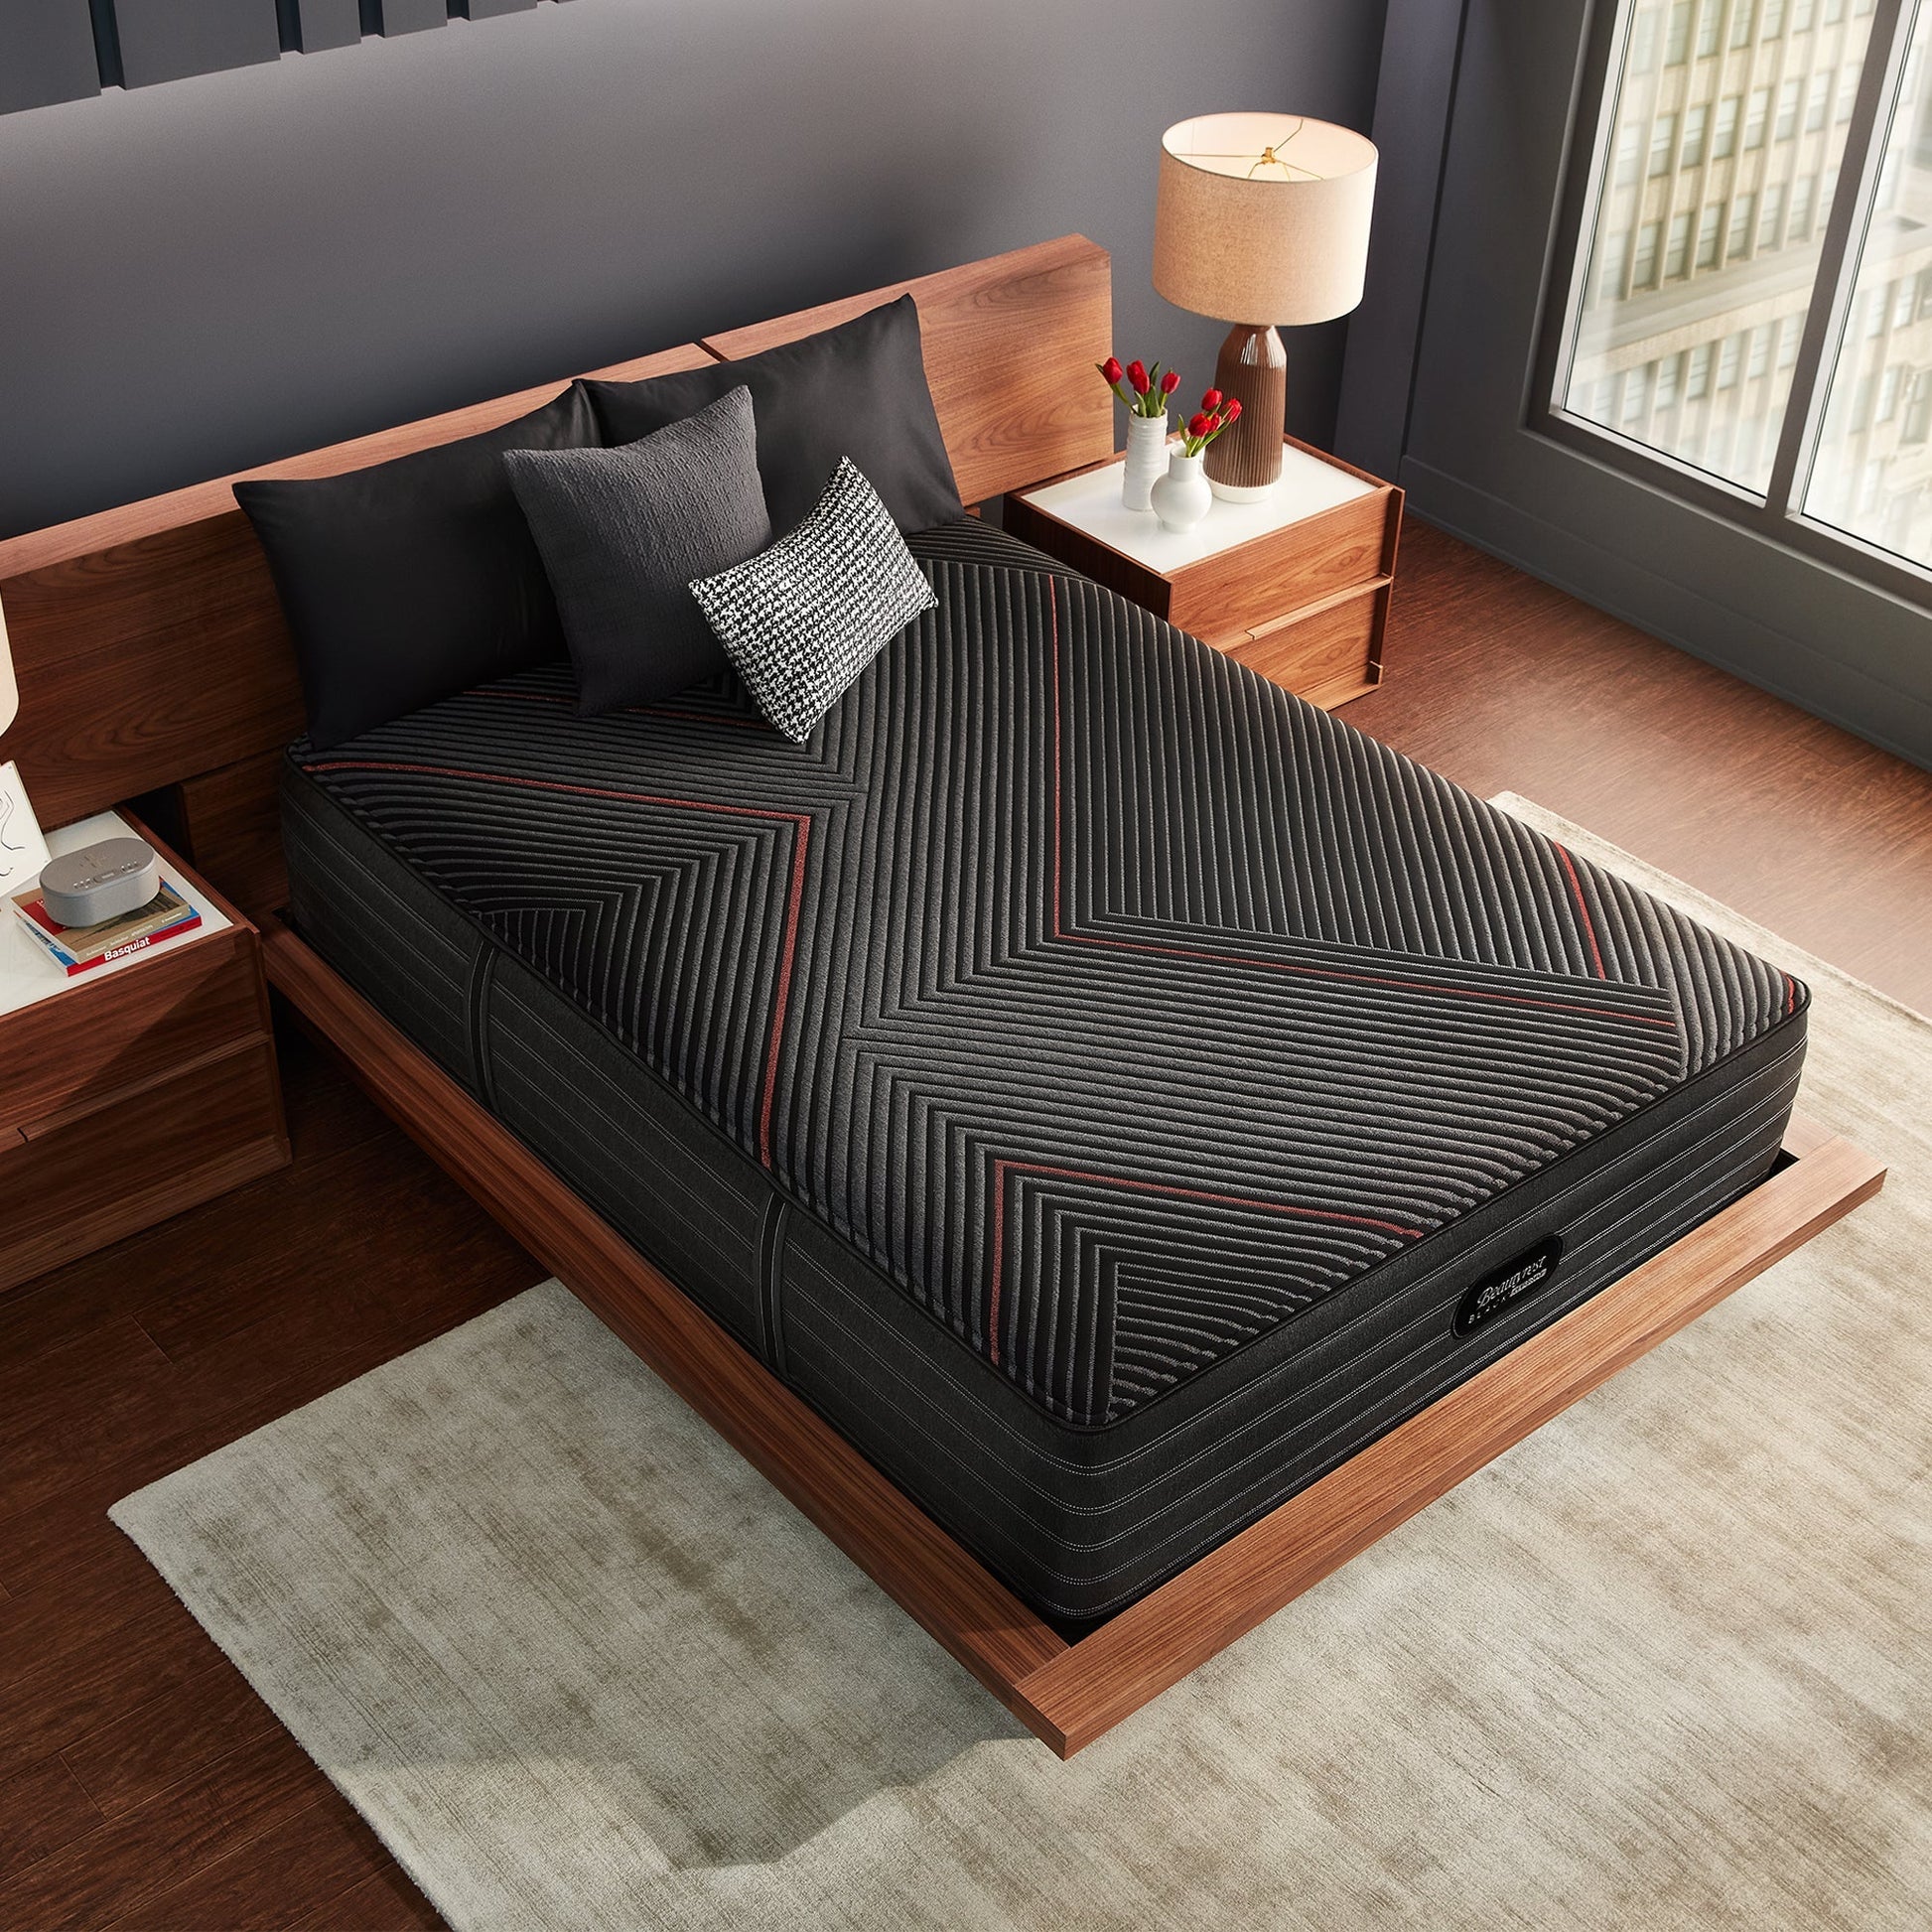 Beautyrest Black Hybrid C-Class Medium Mattress On Bed Frame In Bedroom Overhead View